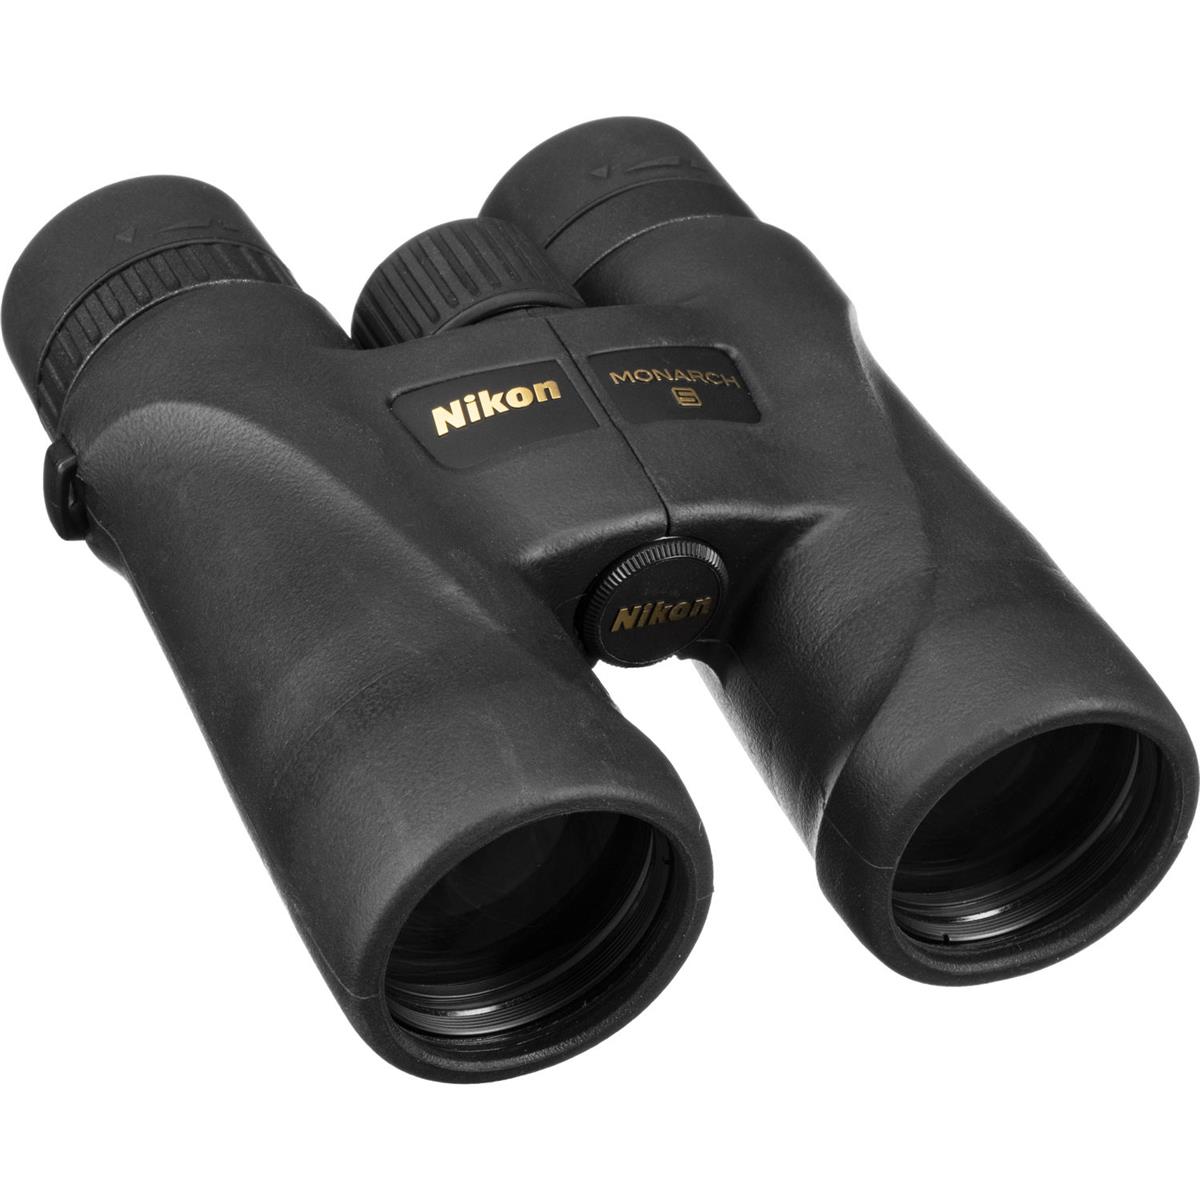 Nikon 8x42 MONARCH 5 Roof Prism Binoculars with 6.3 Deg AOV, Black - Refurbished -  7576B